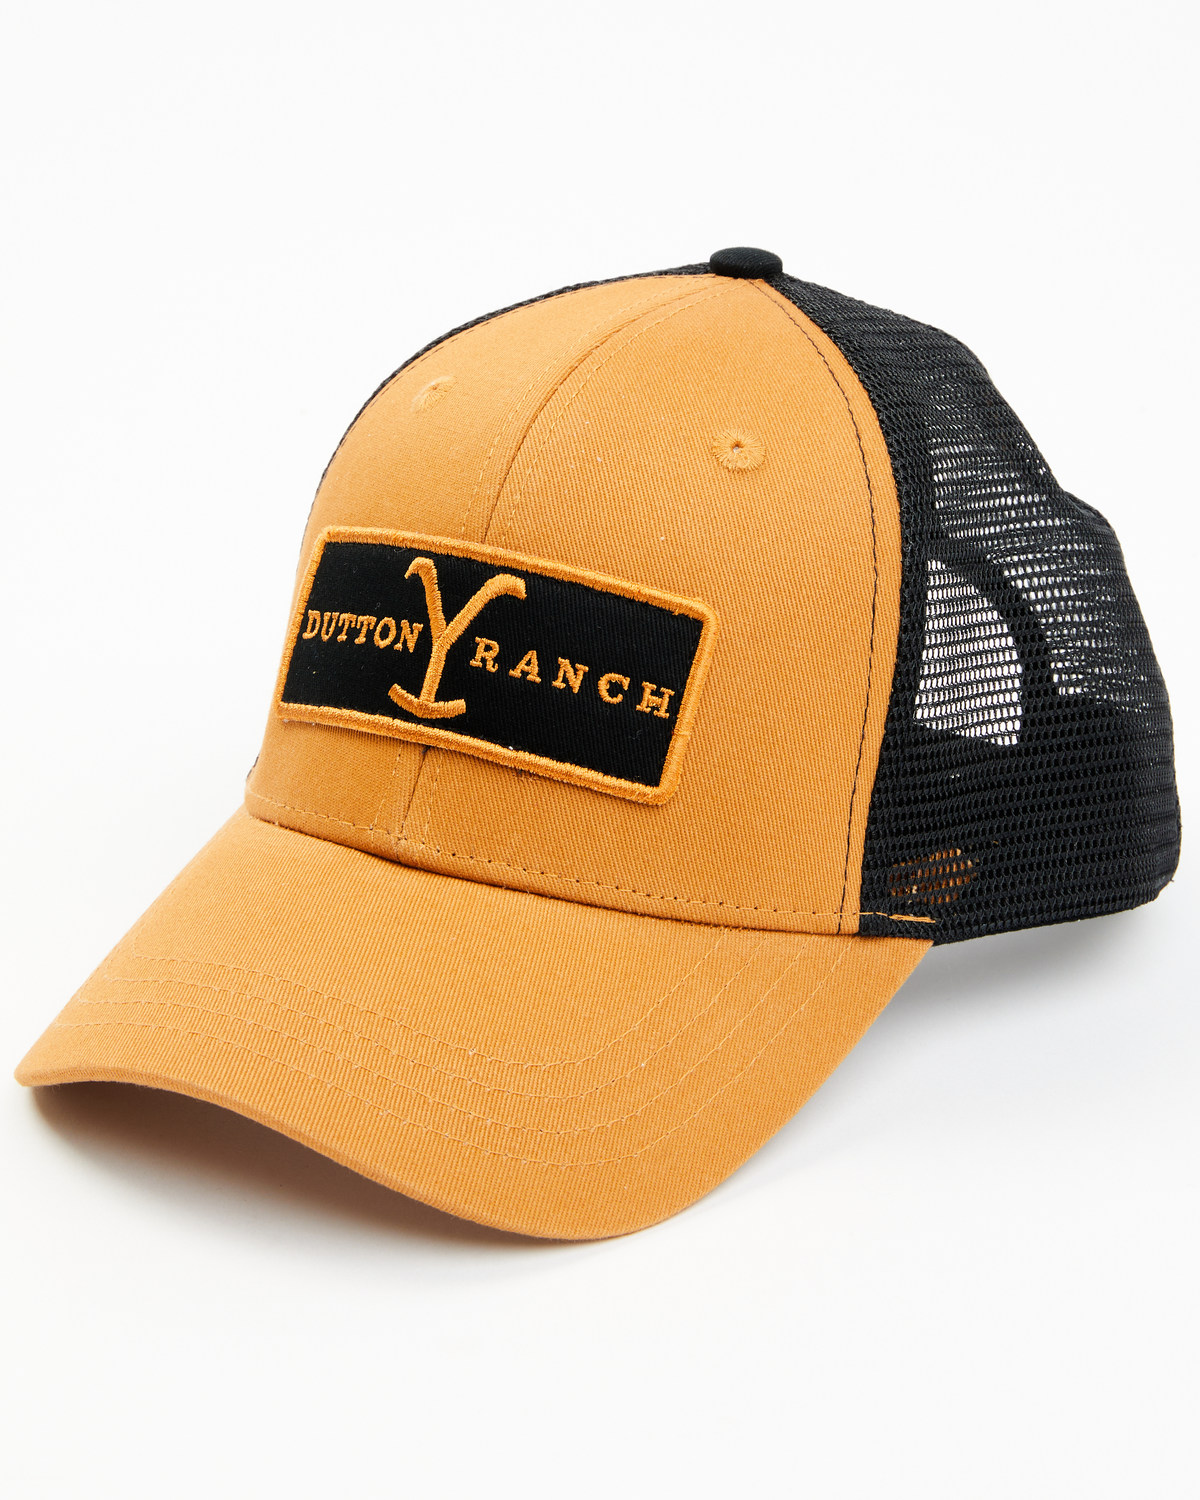 Paramount Network's Yellowstone Men's Rectangular Dutton Ranch Logo Ball Hat